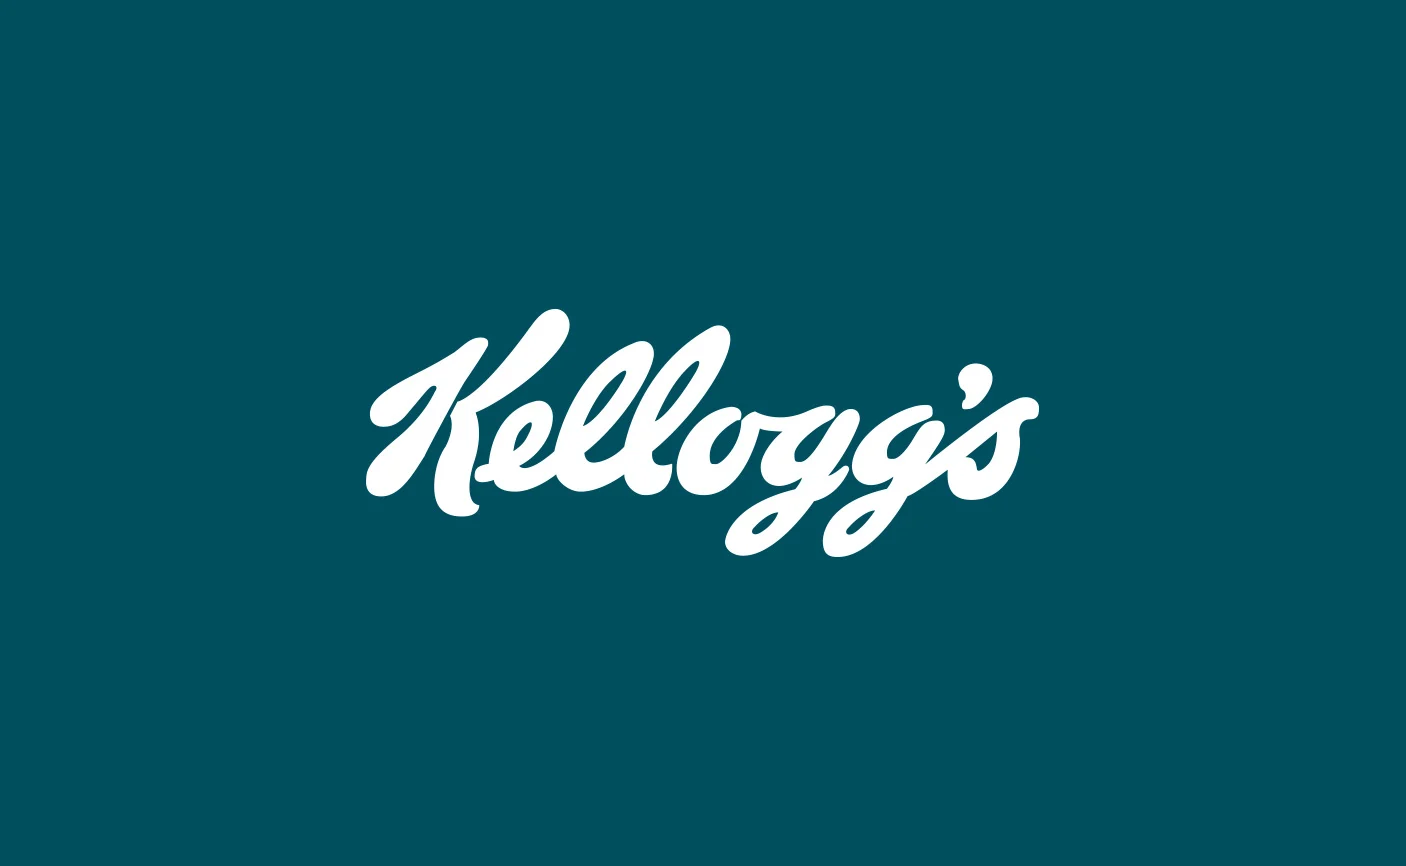 customer quotes kelloggs